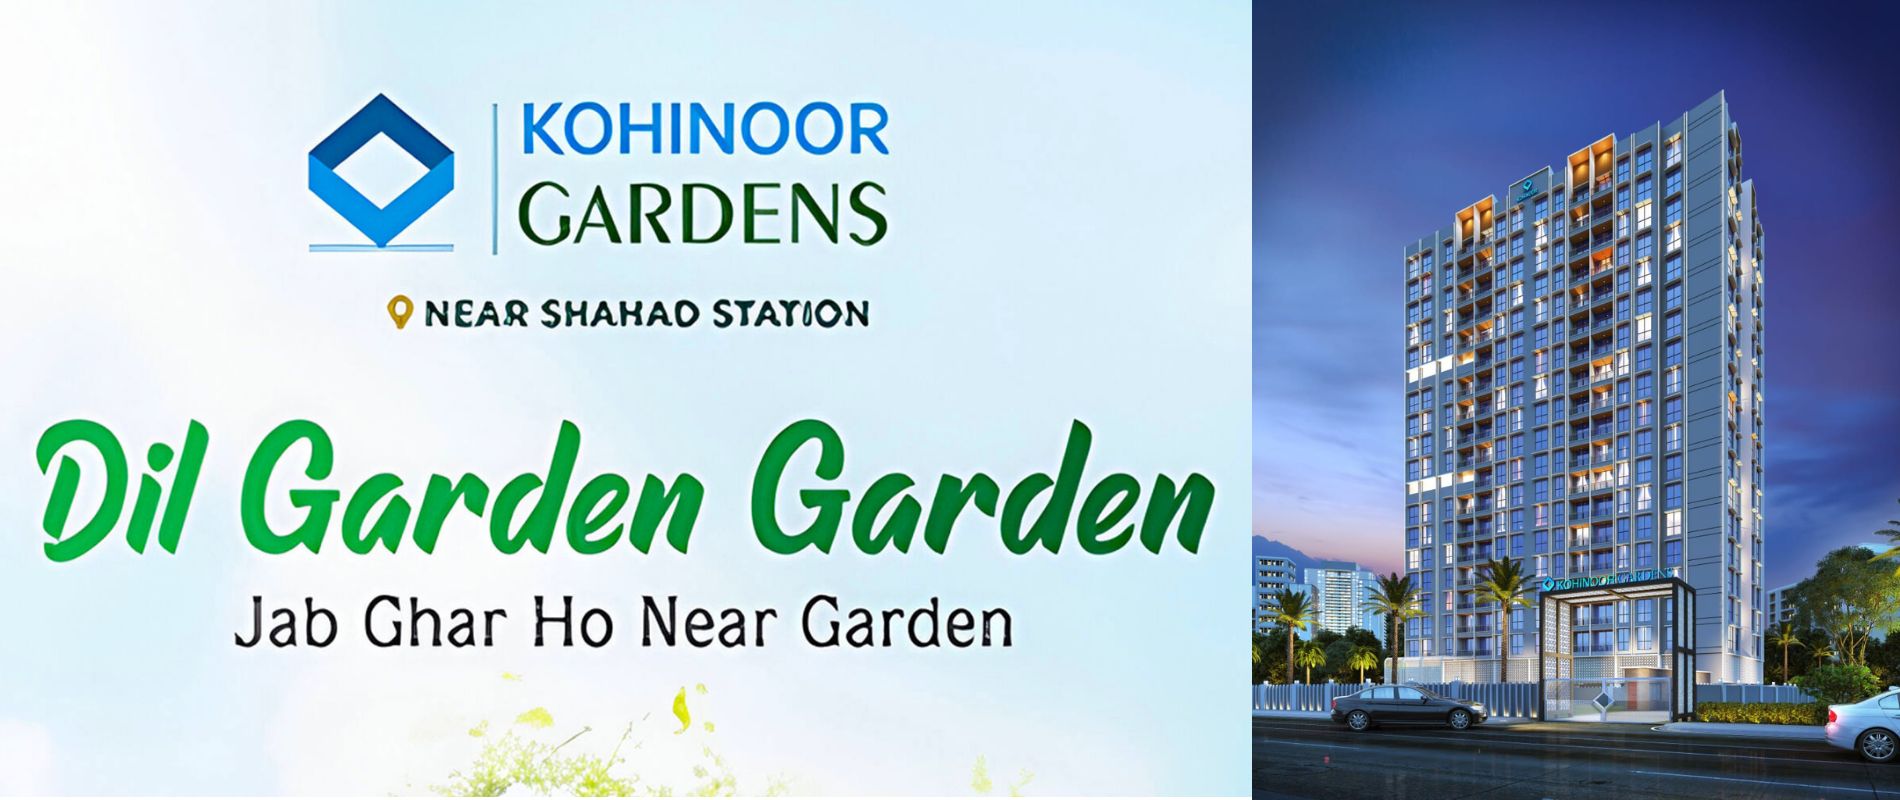 1 bhk flat in shahad under construction - kohinoor gardens